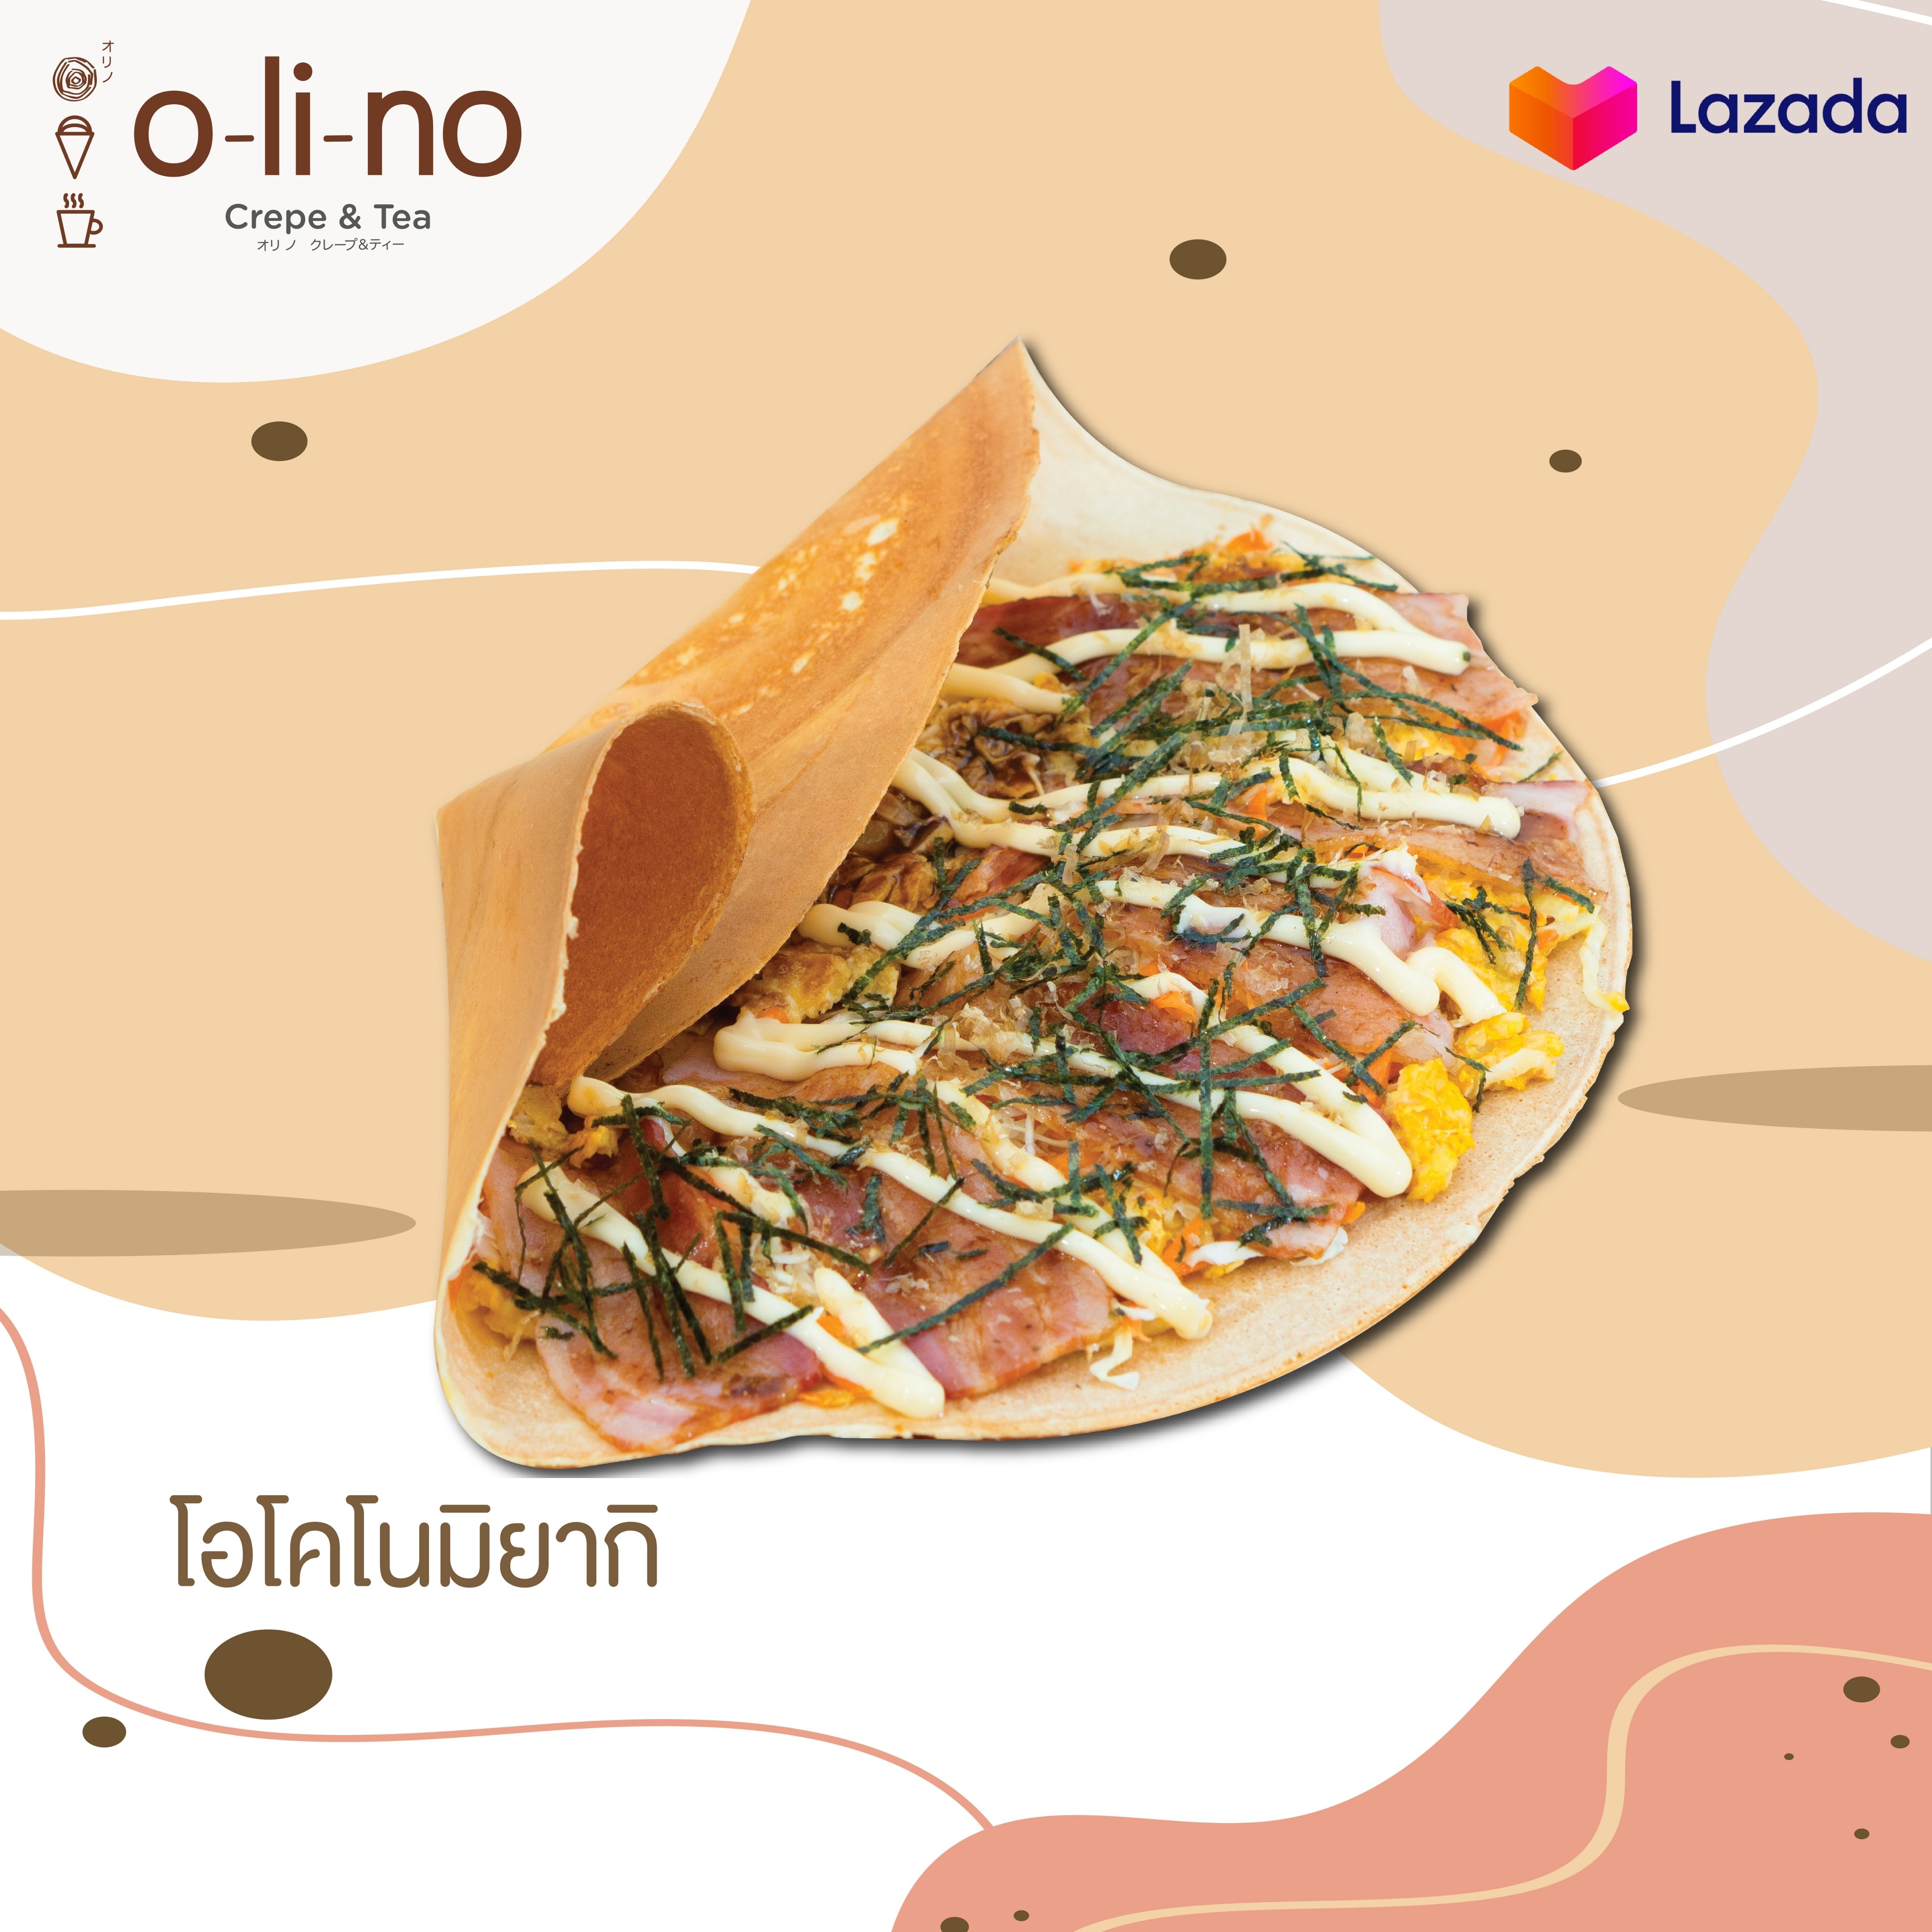 [E-voucher] Olino Crepe&Tea - Okonomiyaki โอลิโนะ เครปแอนด์ที โอโคโนมิยากิ